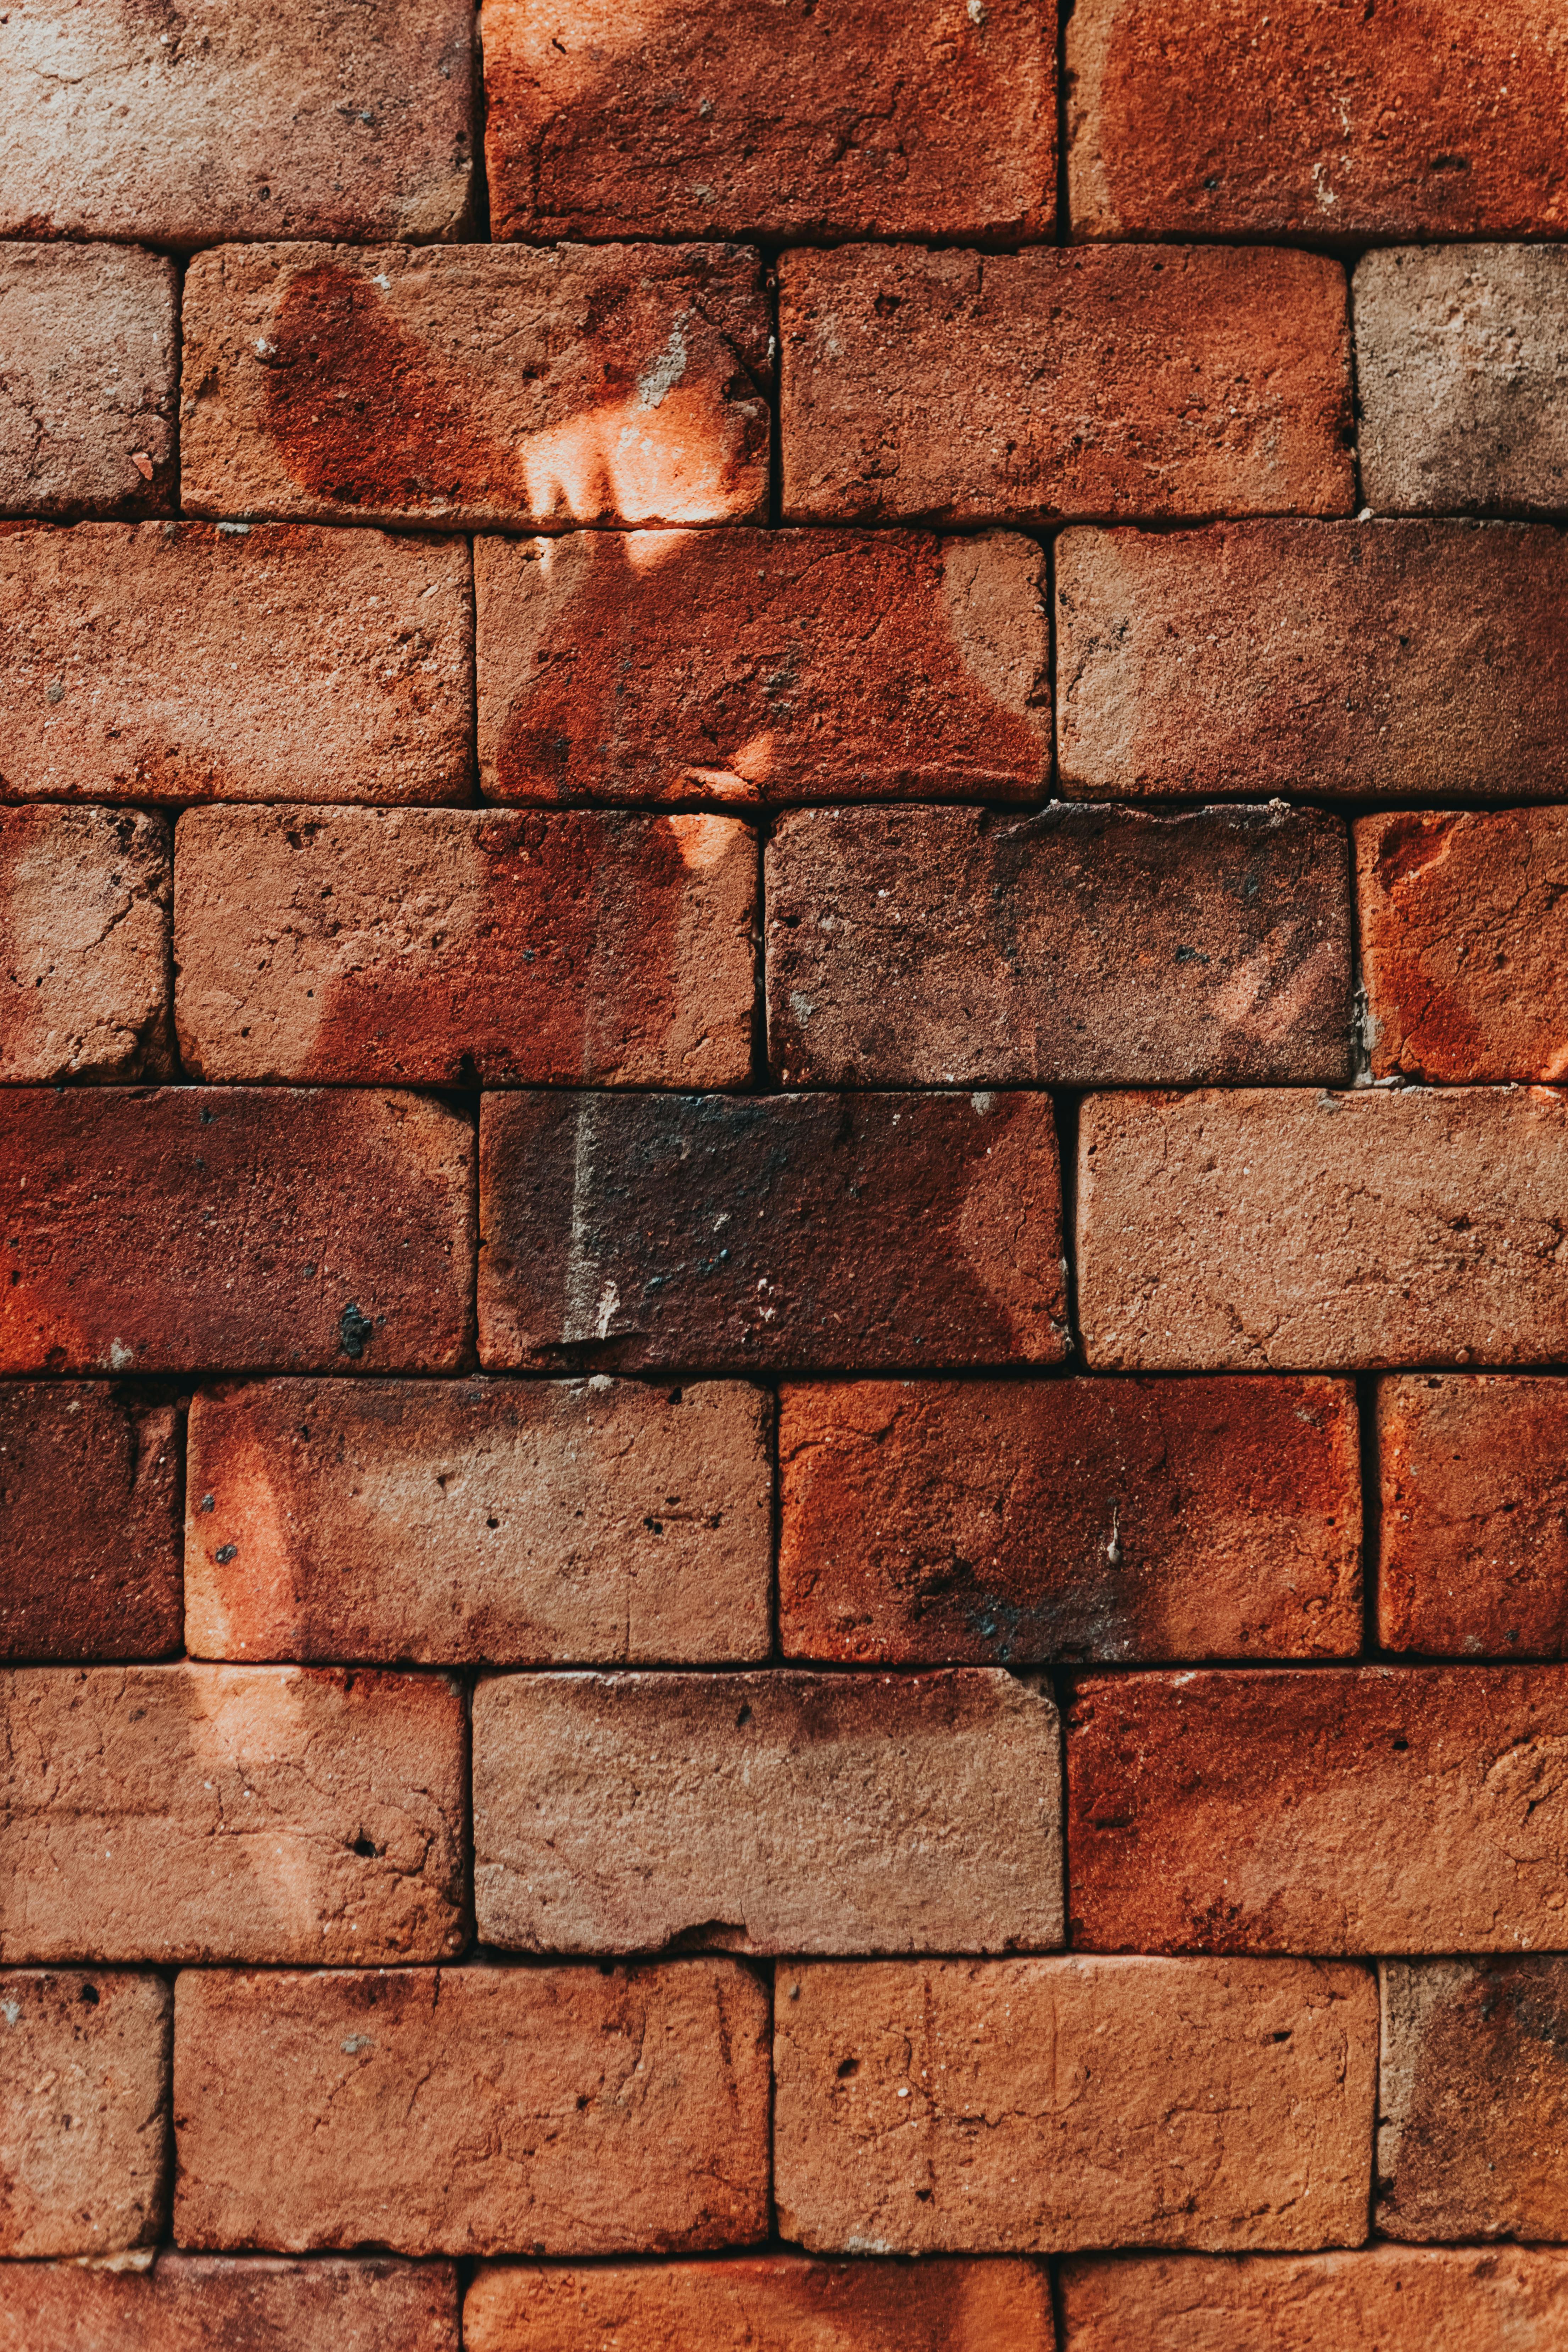 54,751 3d Brick Wallpaper Images, Stock Photos & Vectors | Shutterstock